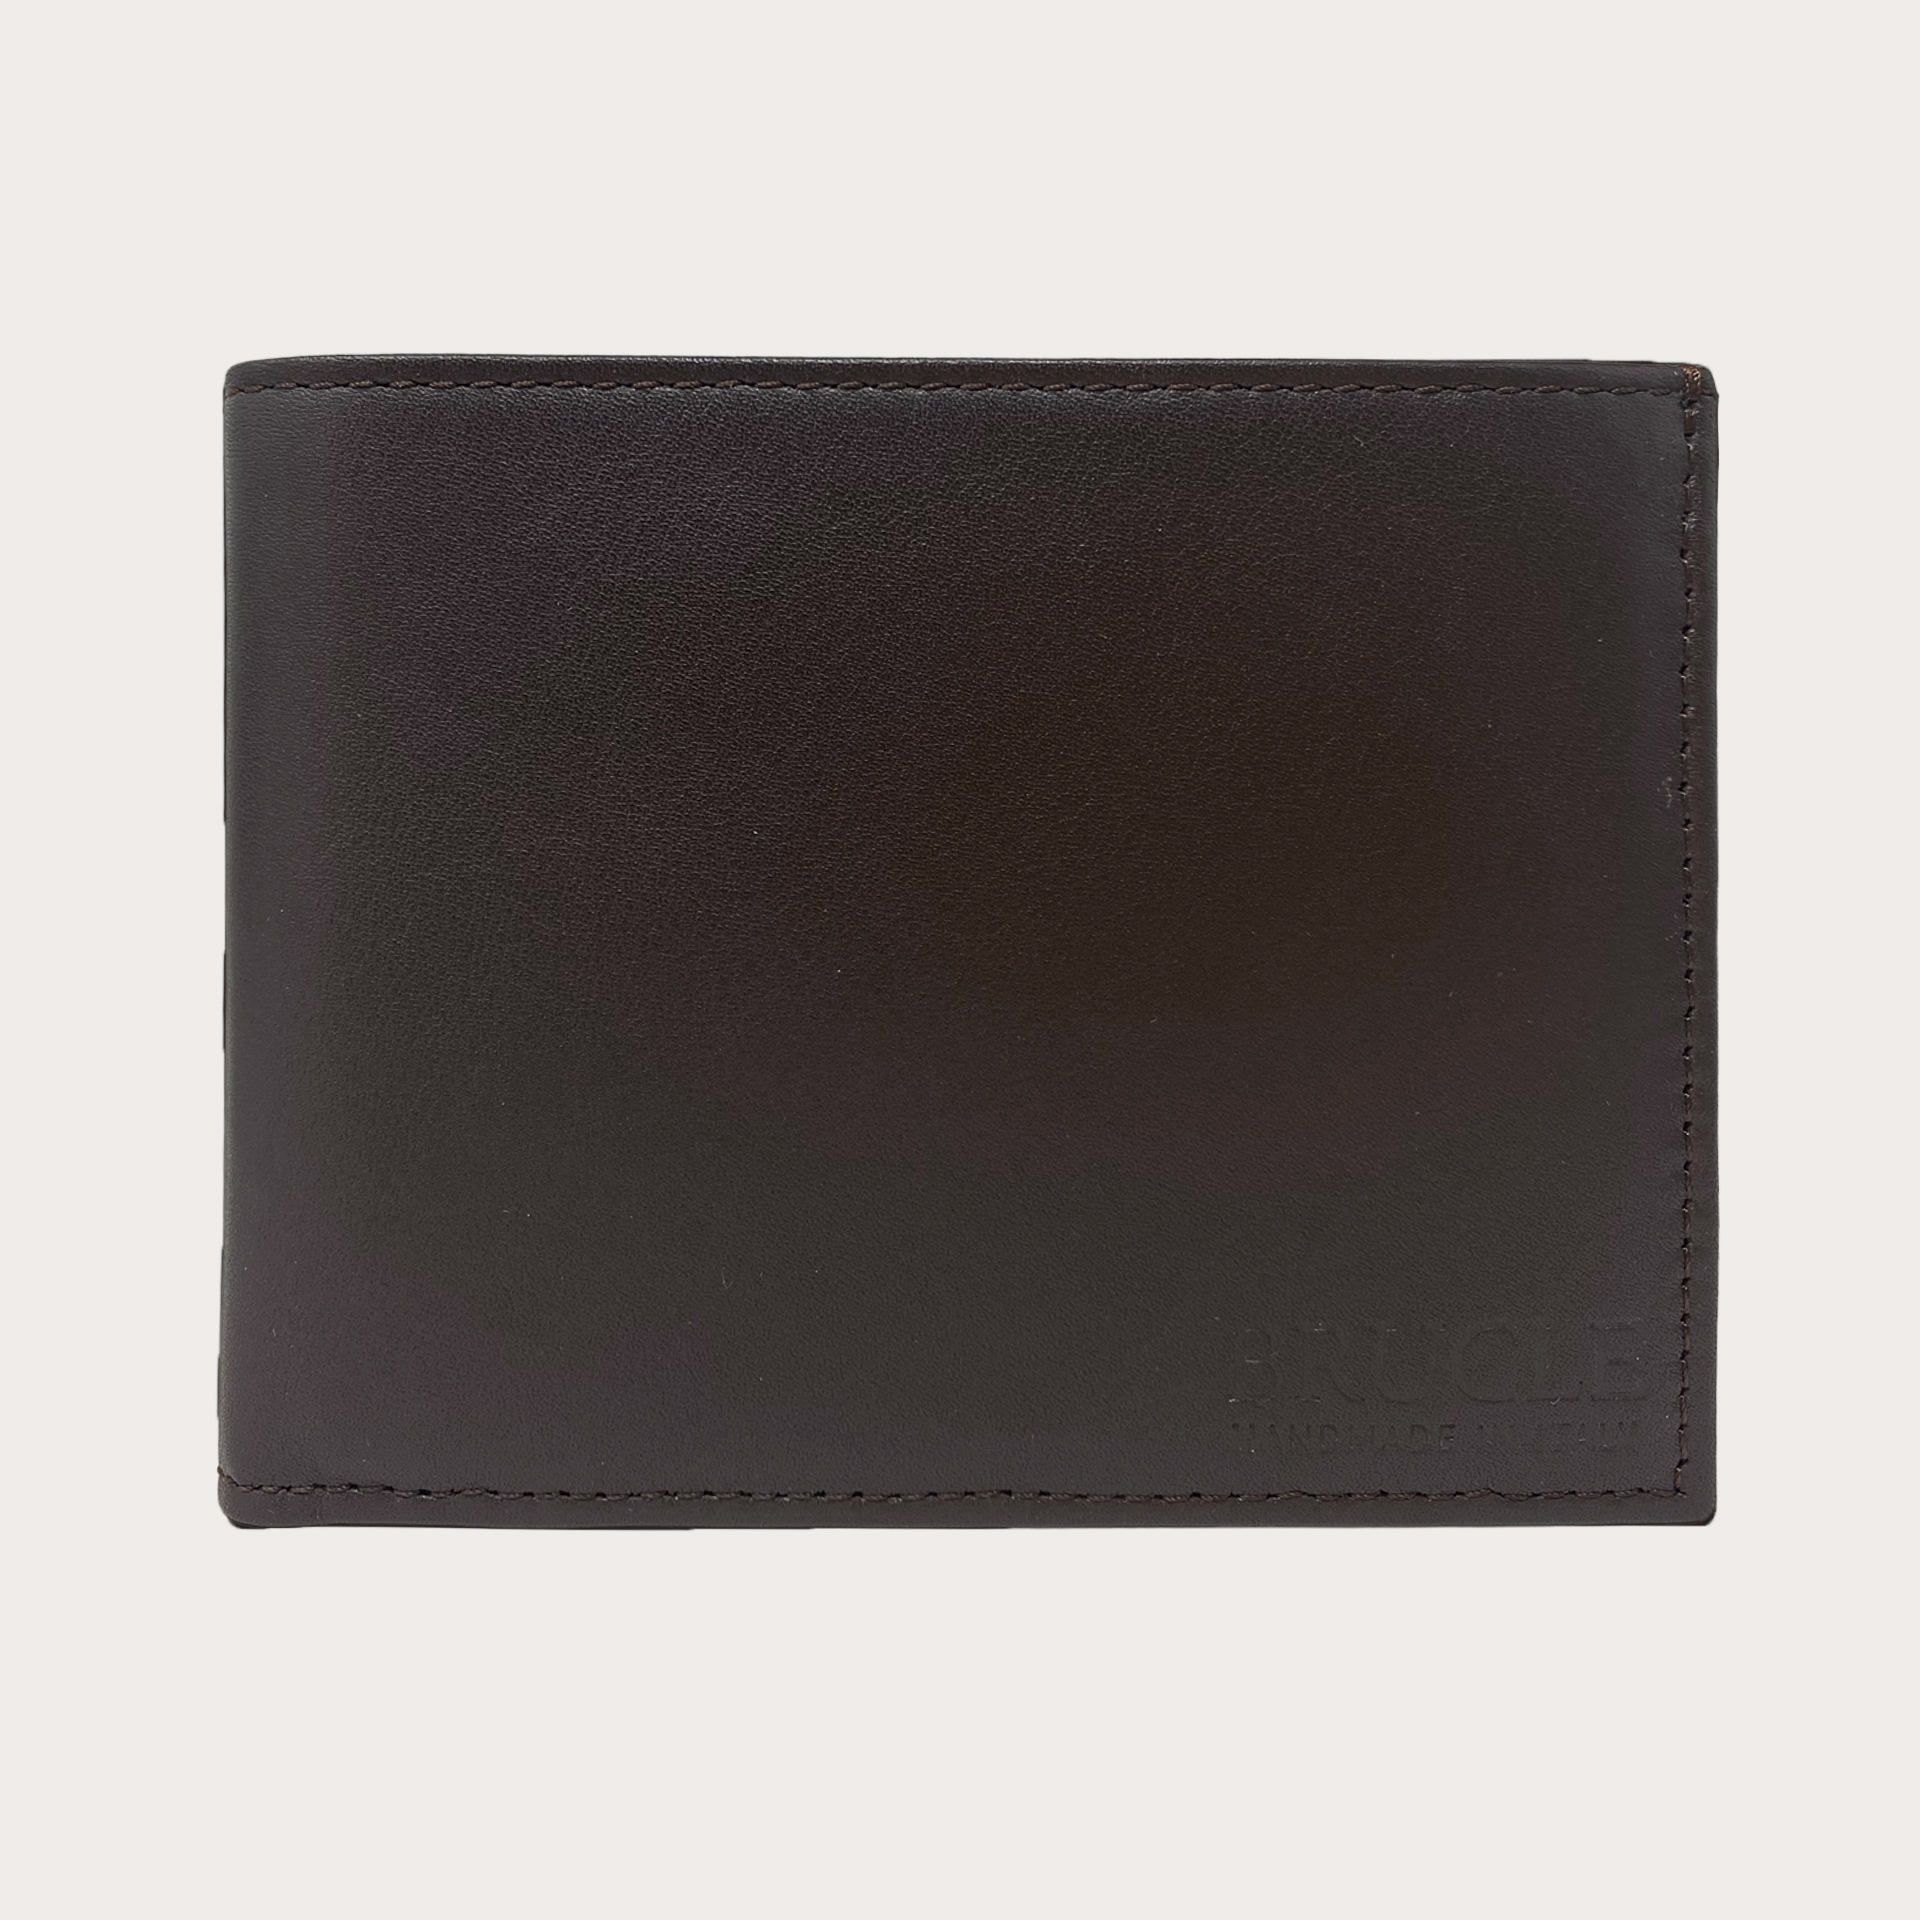 BRUCLE Elegant men's wallet with coin purse, dark brown